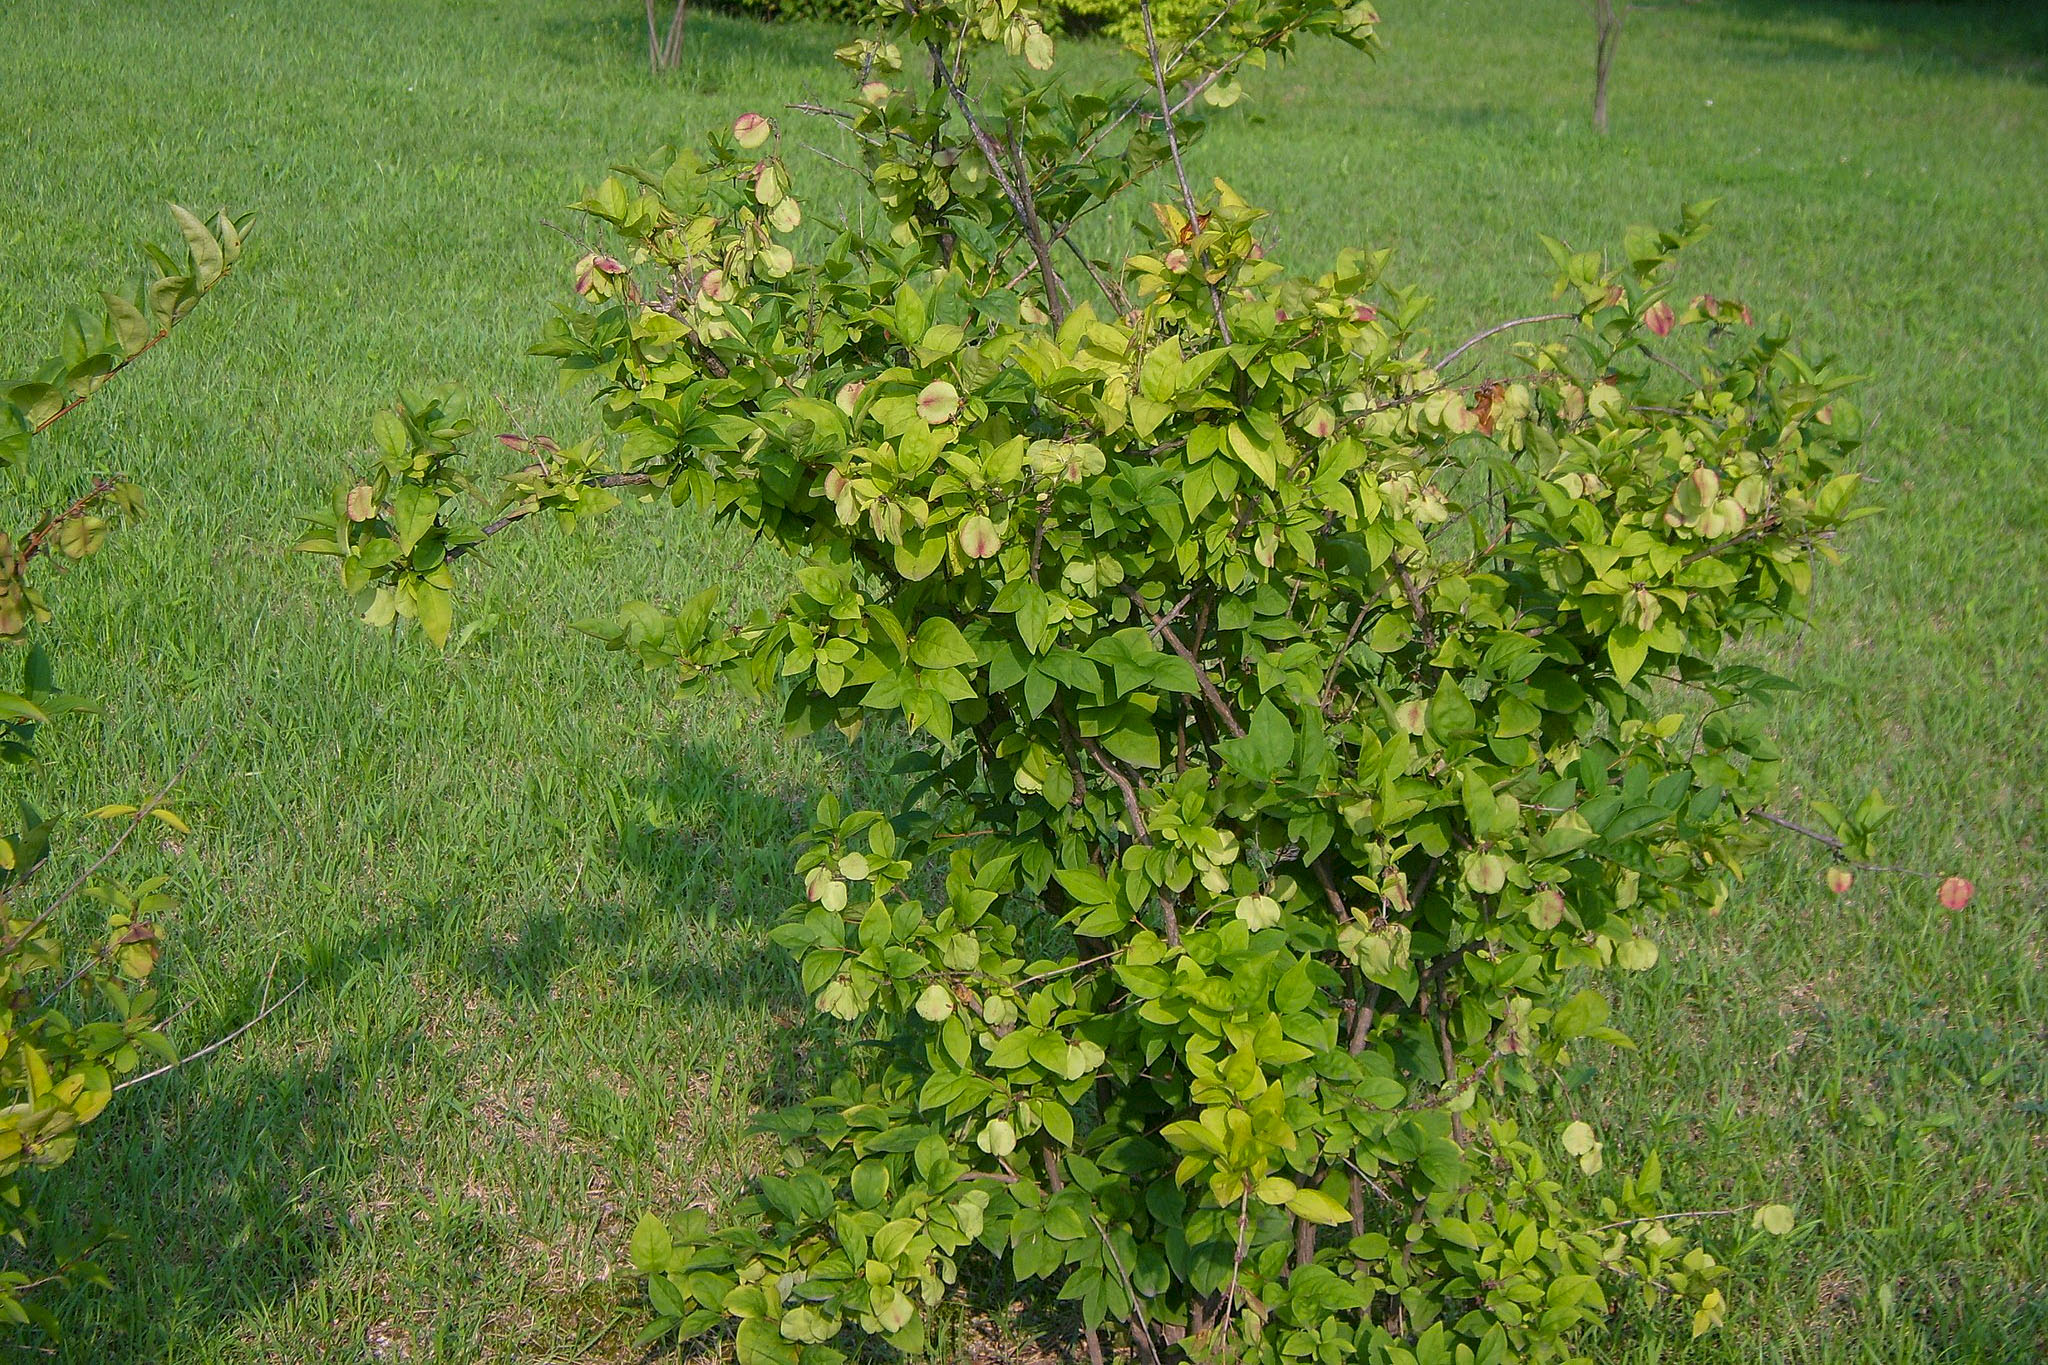 Sneforsythia efter blomstring. Foto:https://commons.wikimedia.org/wiki/File:Abeliophyllum_distichum